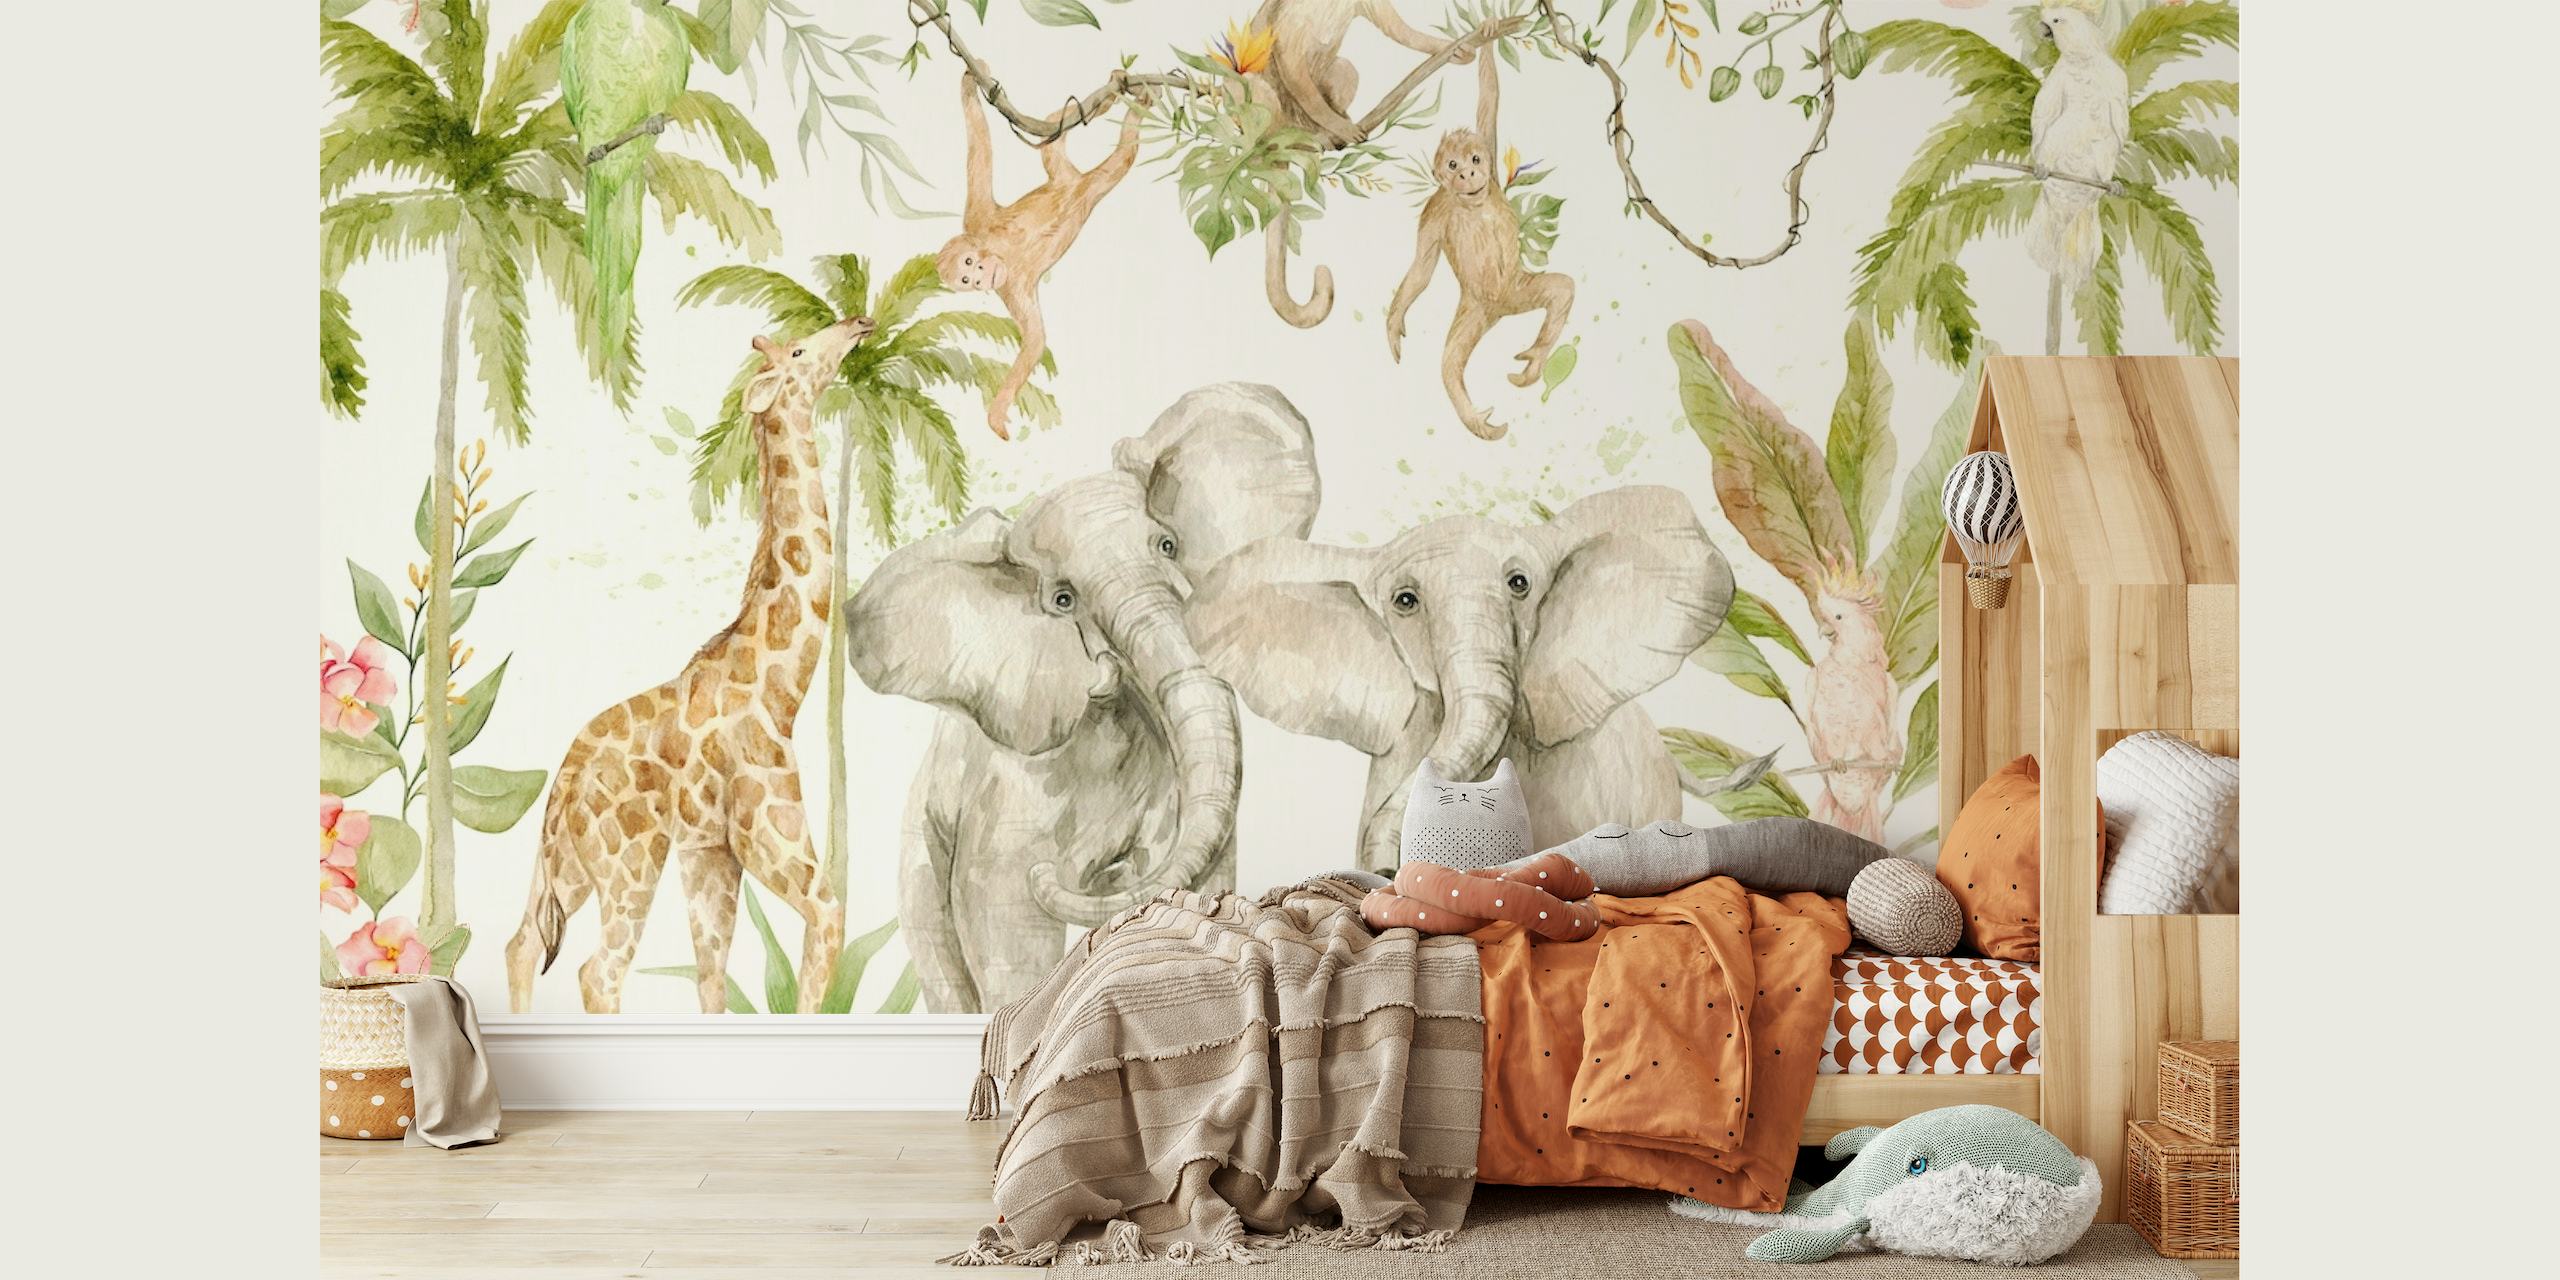 Hand-painted style wall mural of a tropical safari jungle scene with elephants, giraffes, and monkeys among greenery